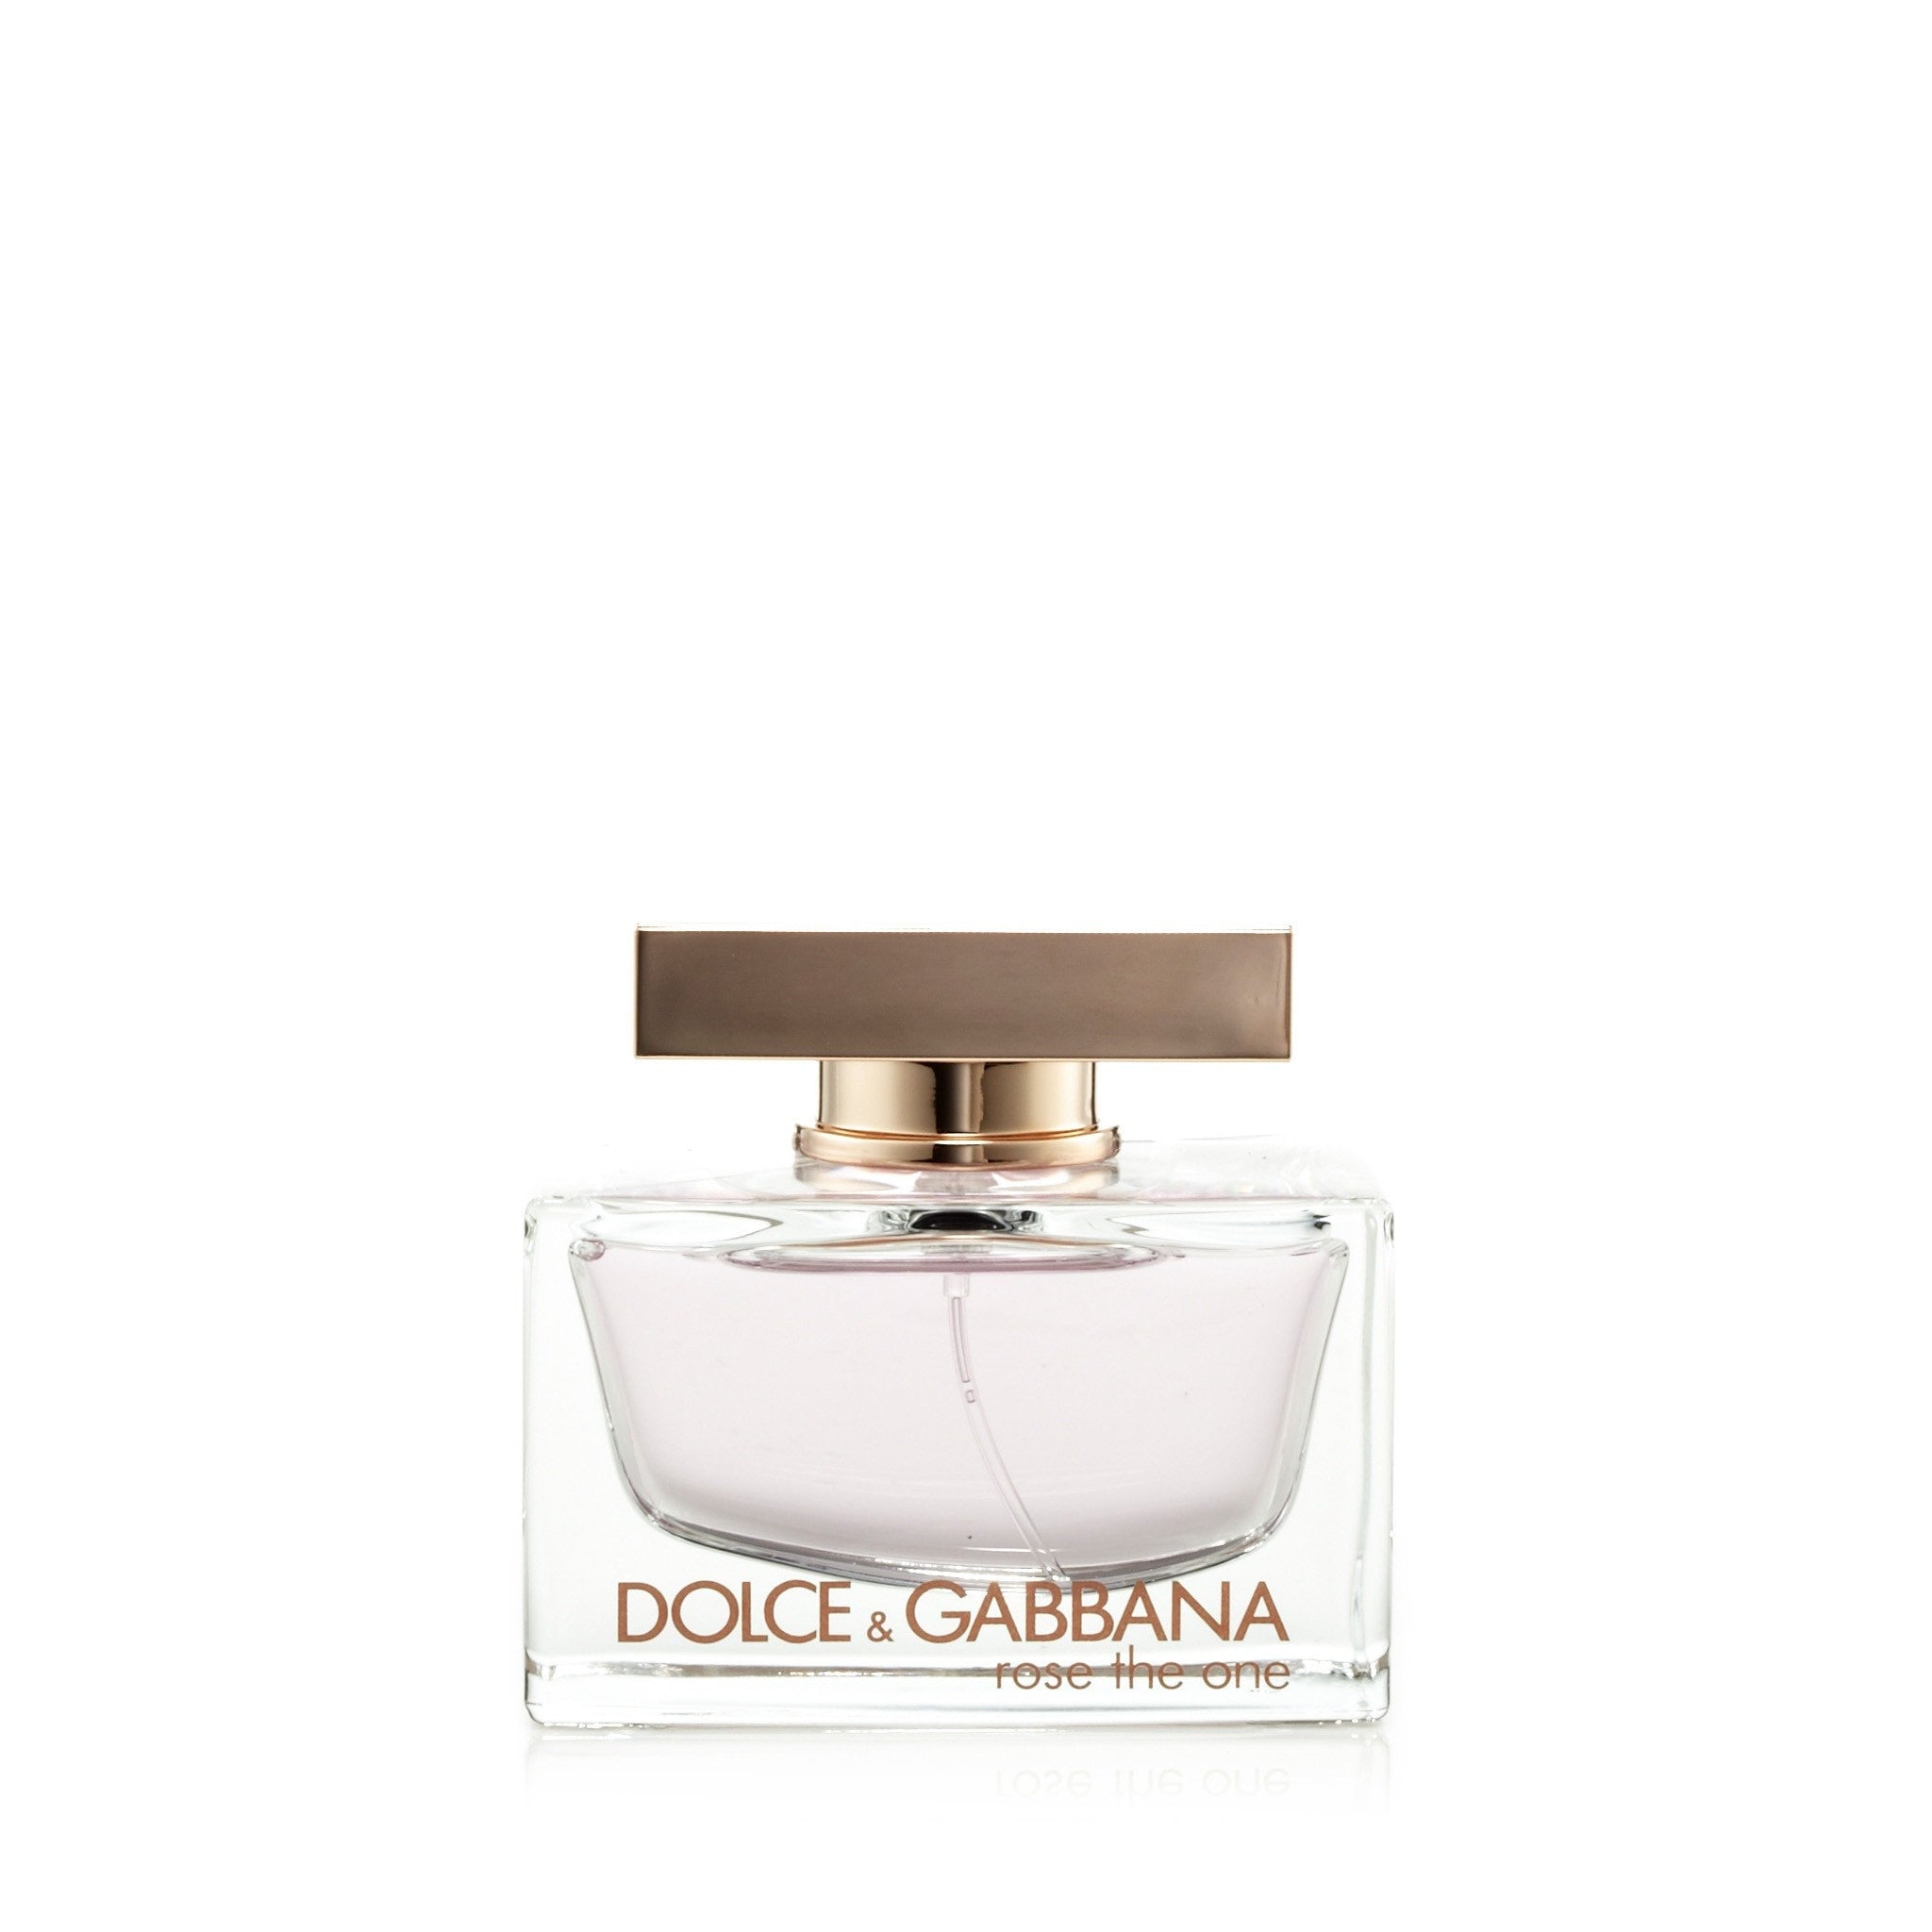 Oh La La! Agatha Ruiz de la Prada perfume - a fragrance for women 2009